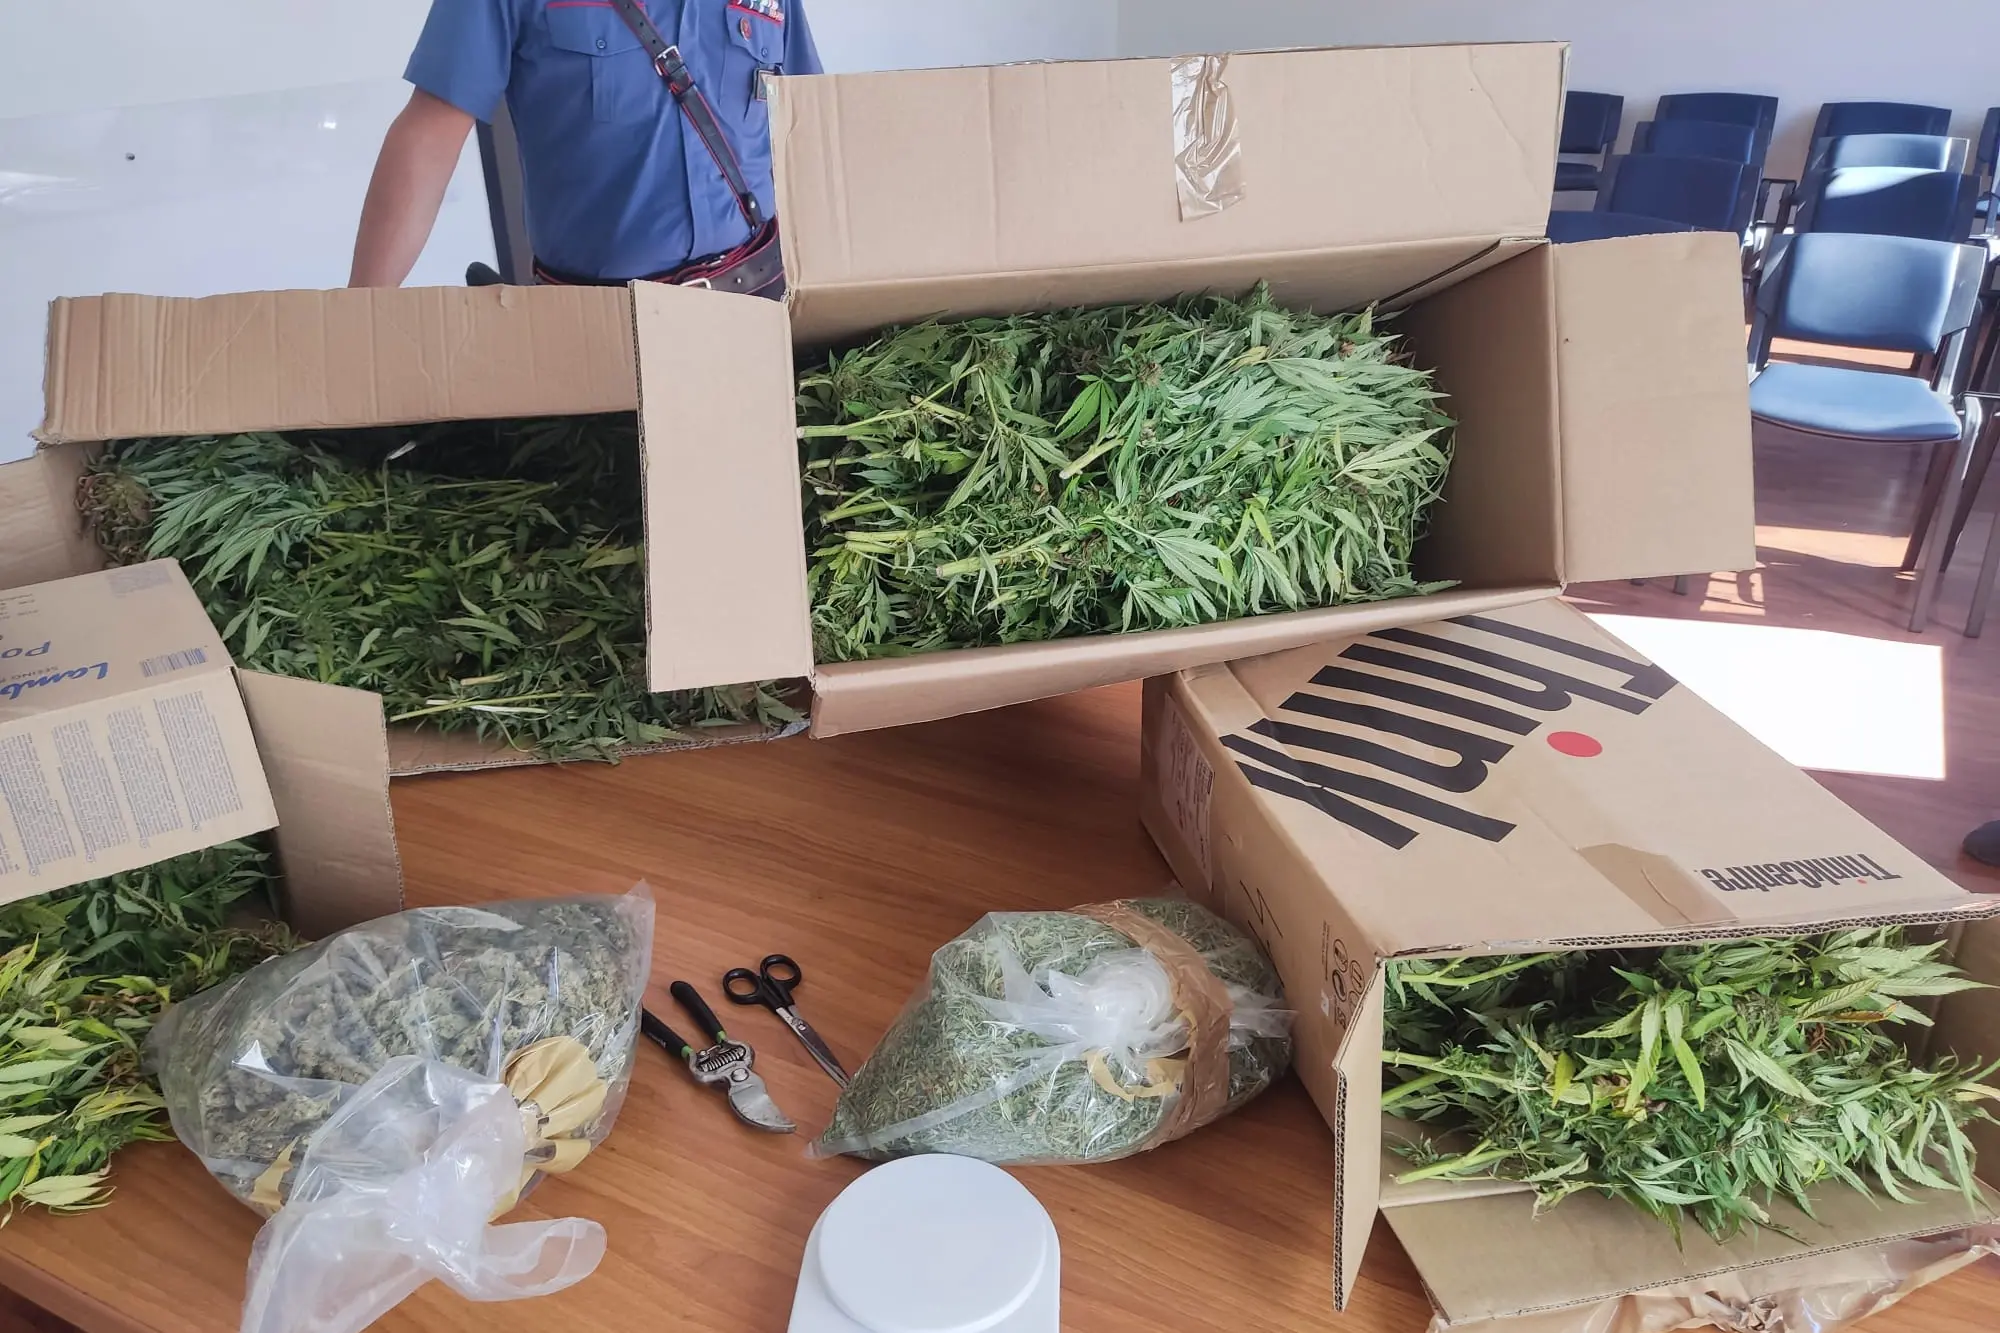 The seized marijuana (Carabinieri photo)